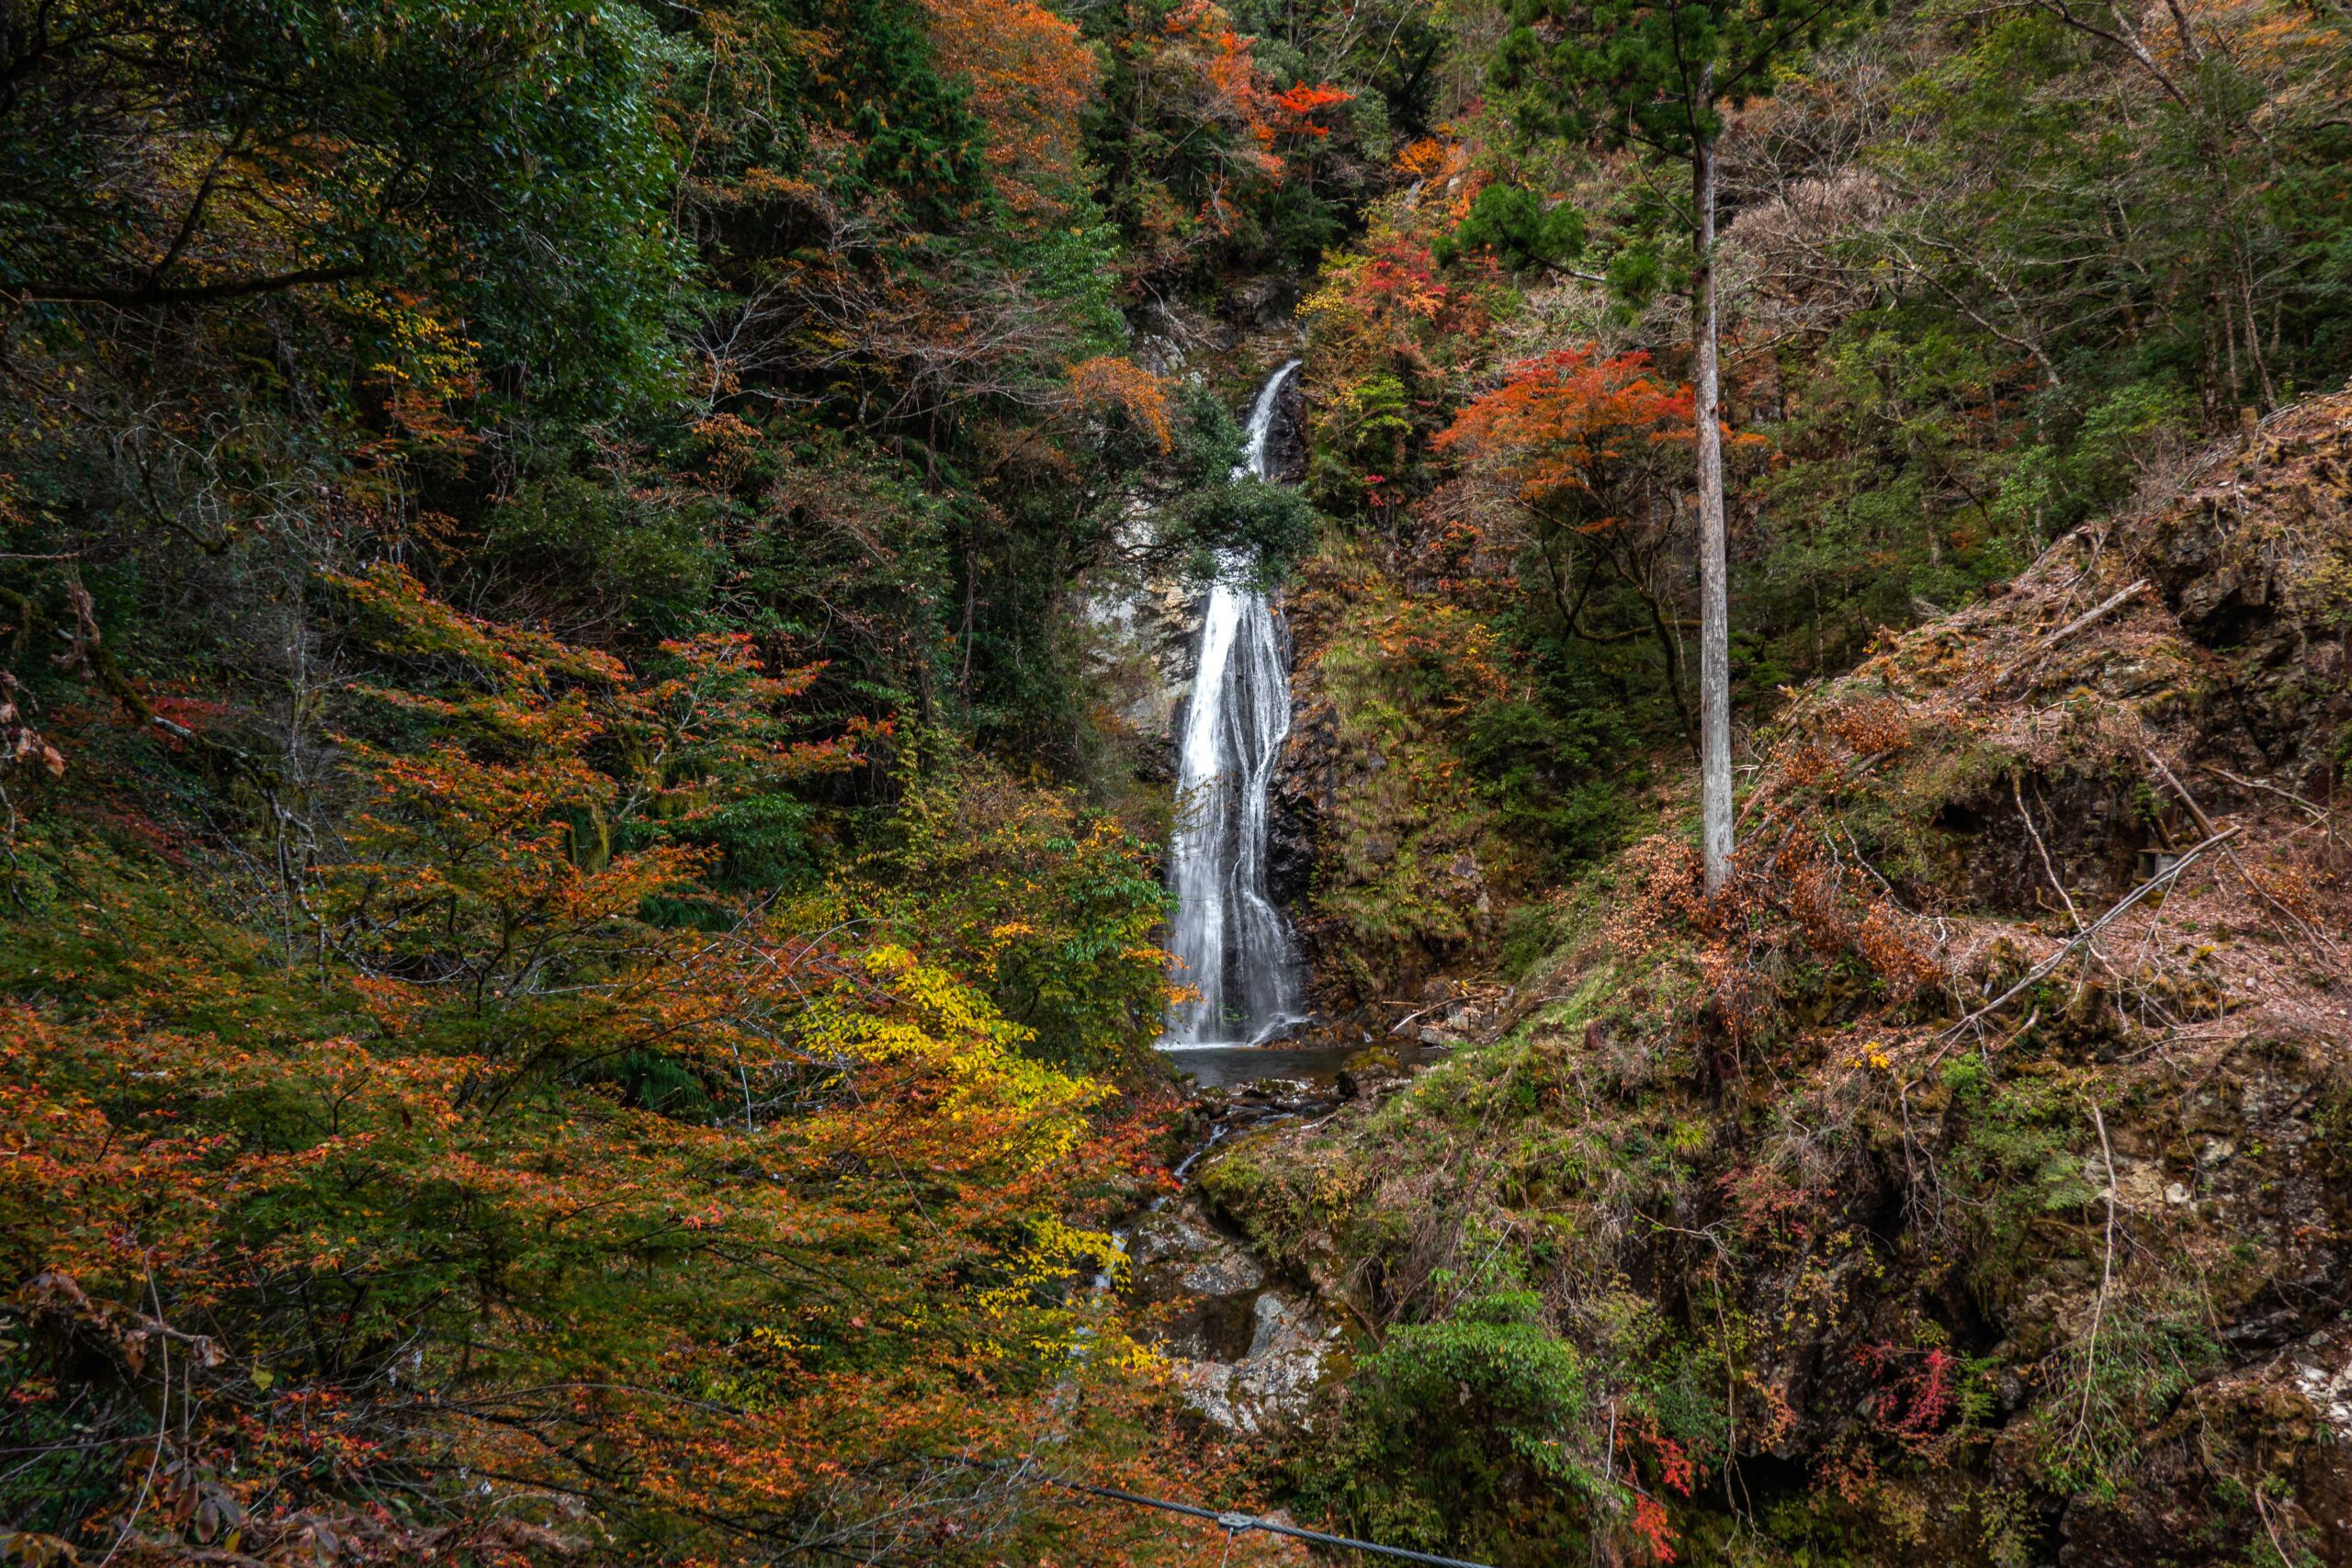 DSC07980-scaled 兵庫県  原不動滝(日本の滝100選に選定された紅葉景色の美しい絶景の滝 ! 撮影した写真の紹介、 アクセス情報など)　